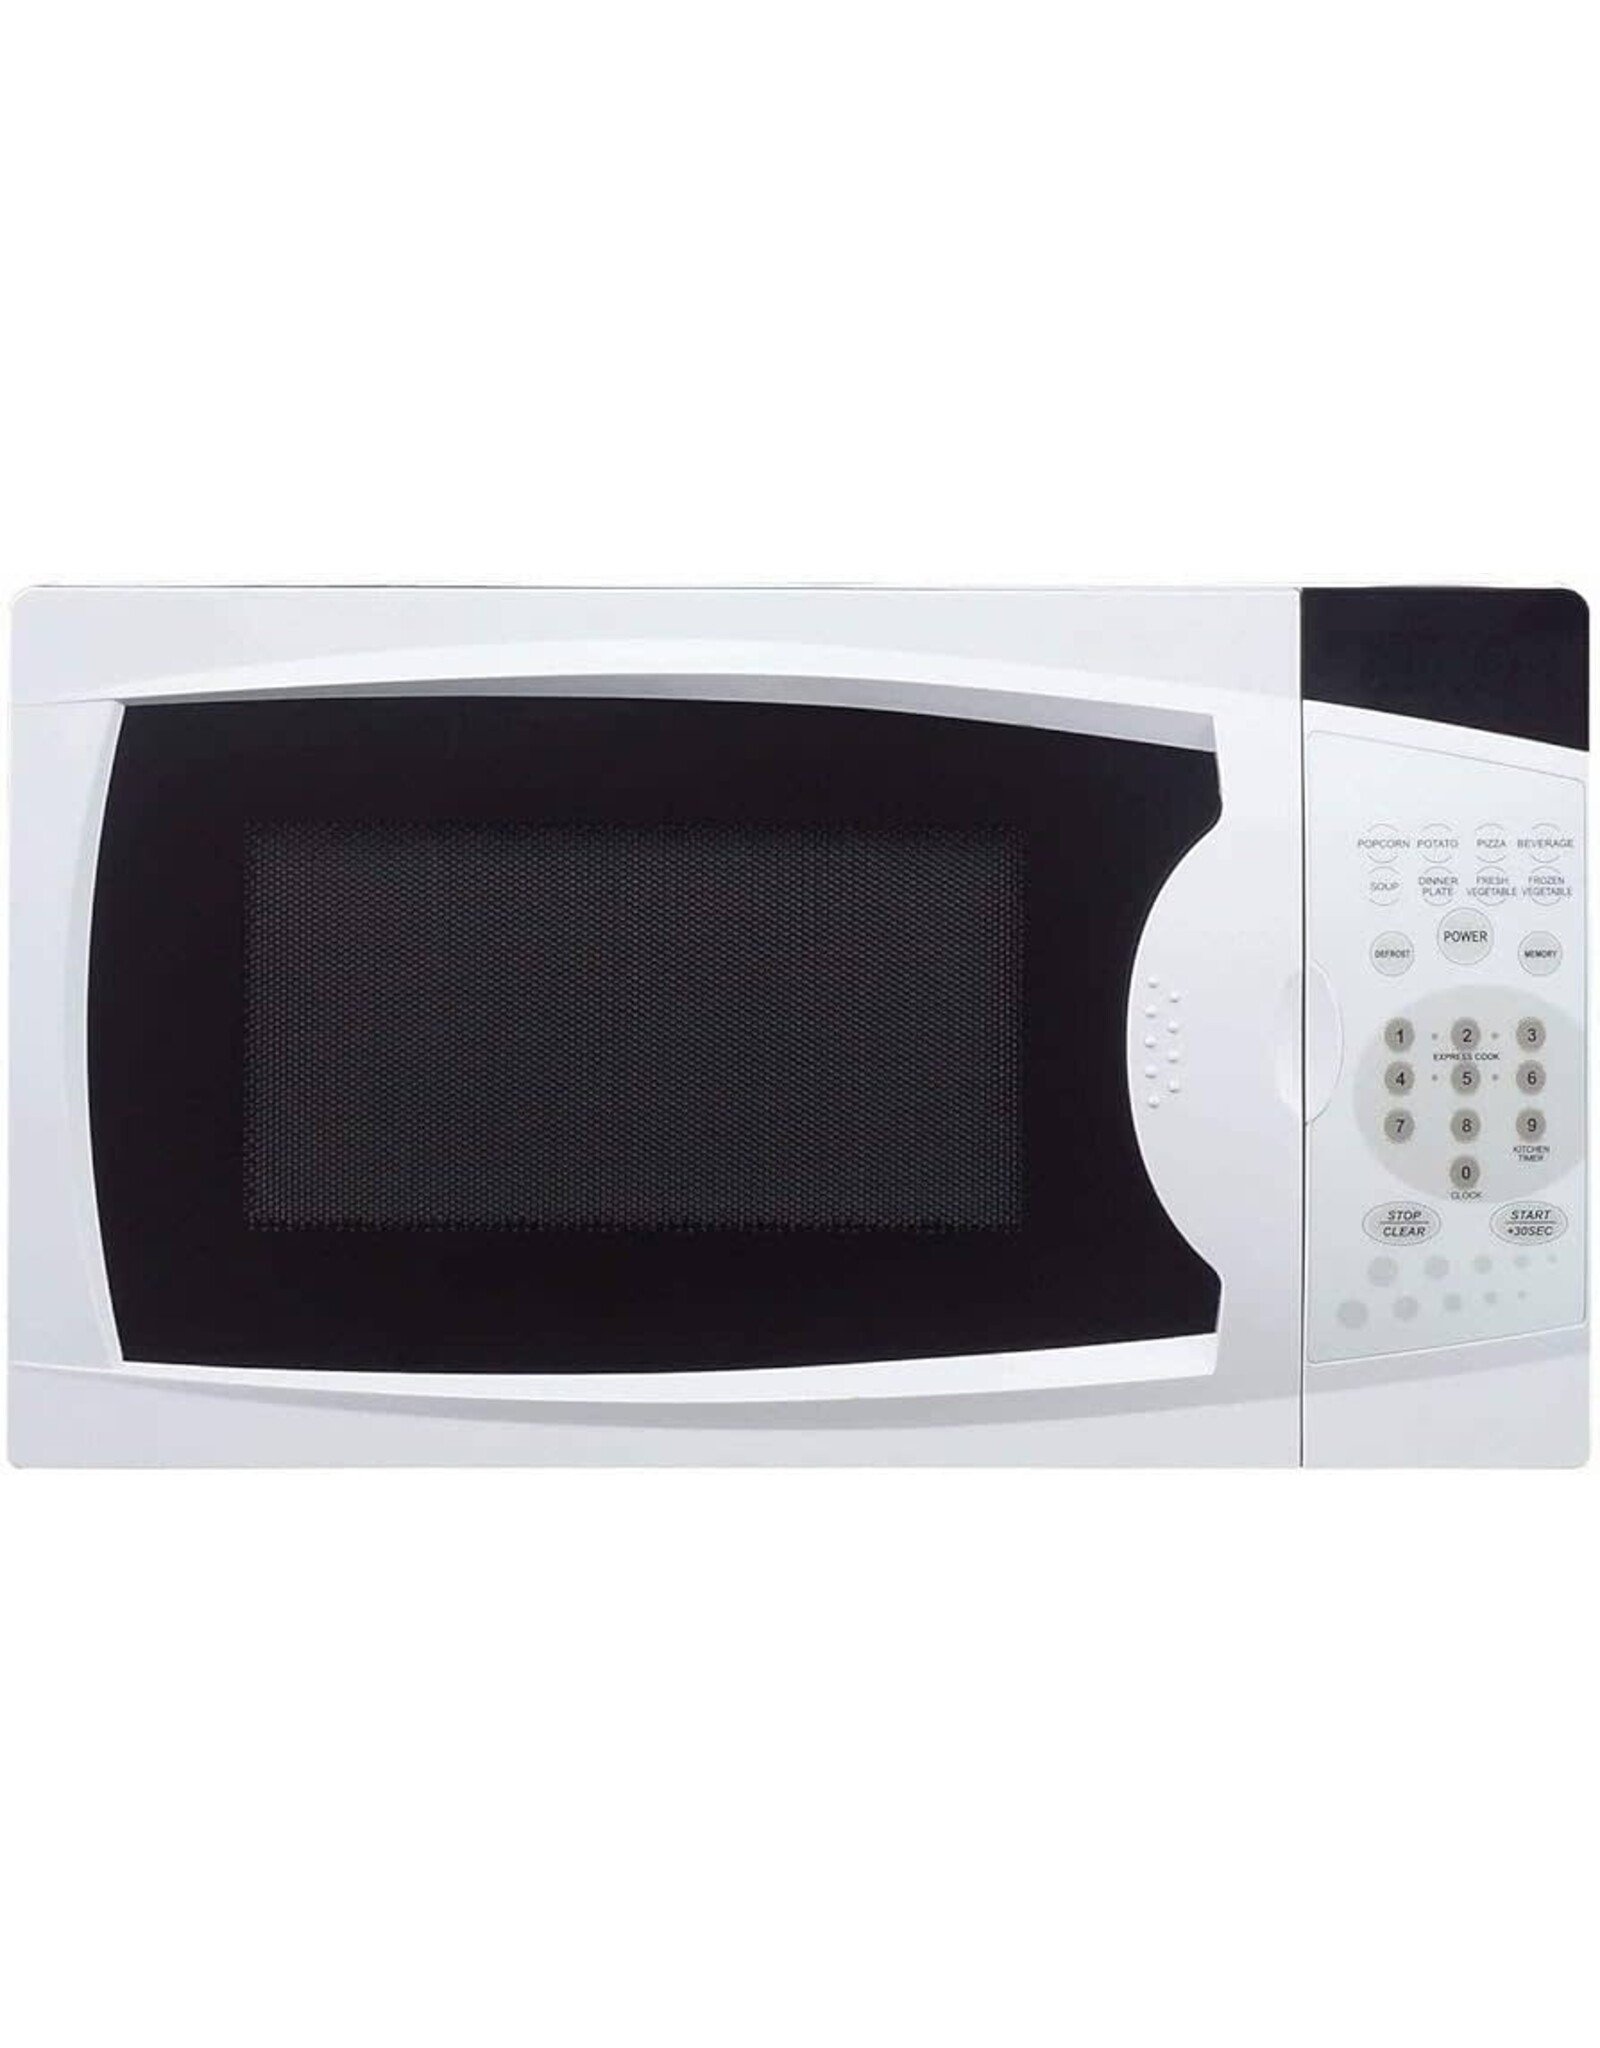 MAGIC CHEF MCM770W 0.7 cu. ft. 700-Watt Countertop Microwave in White